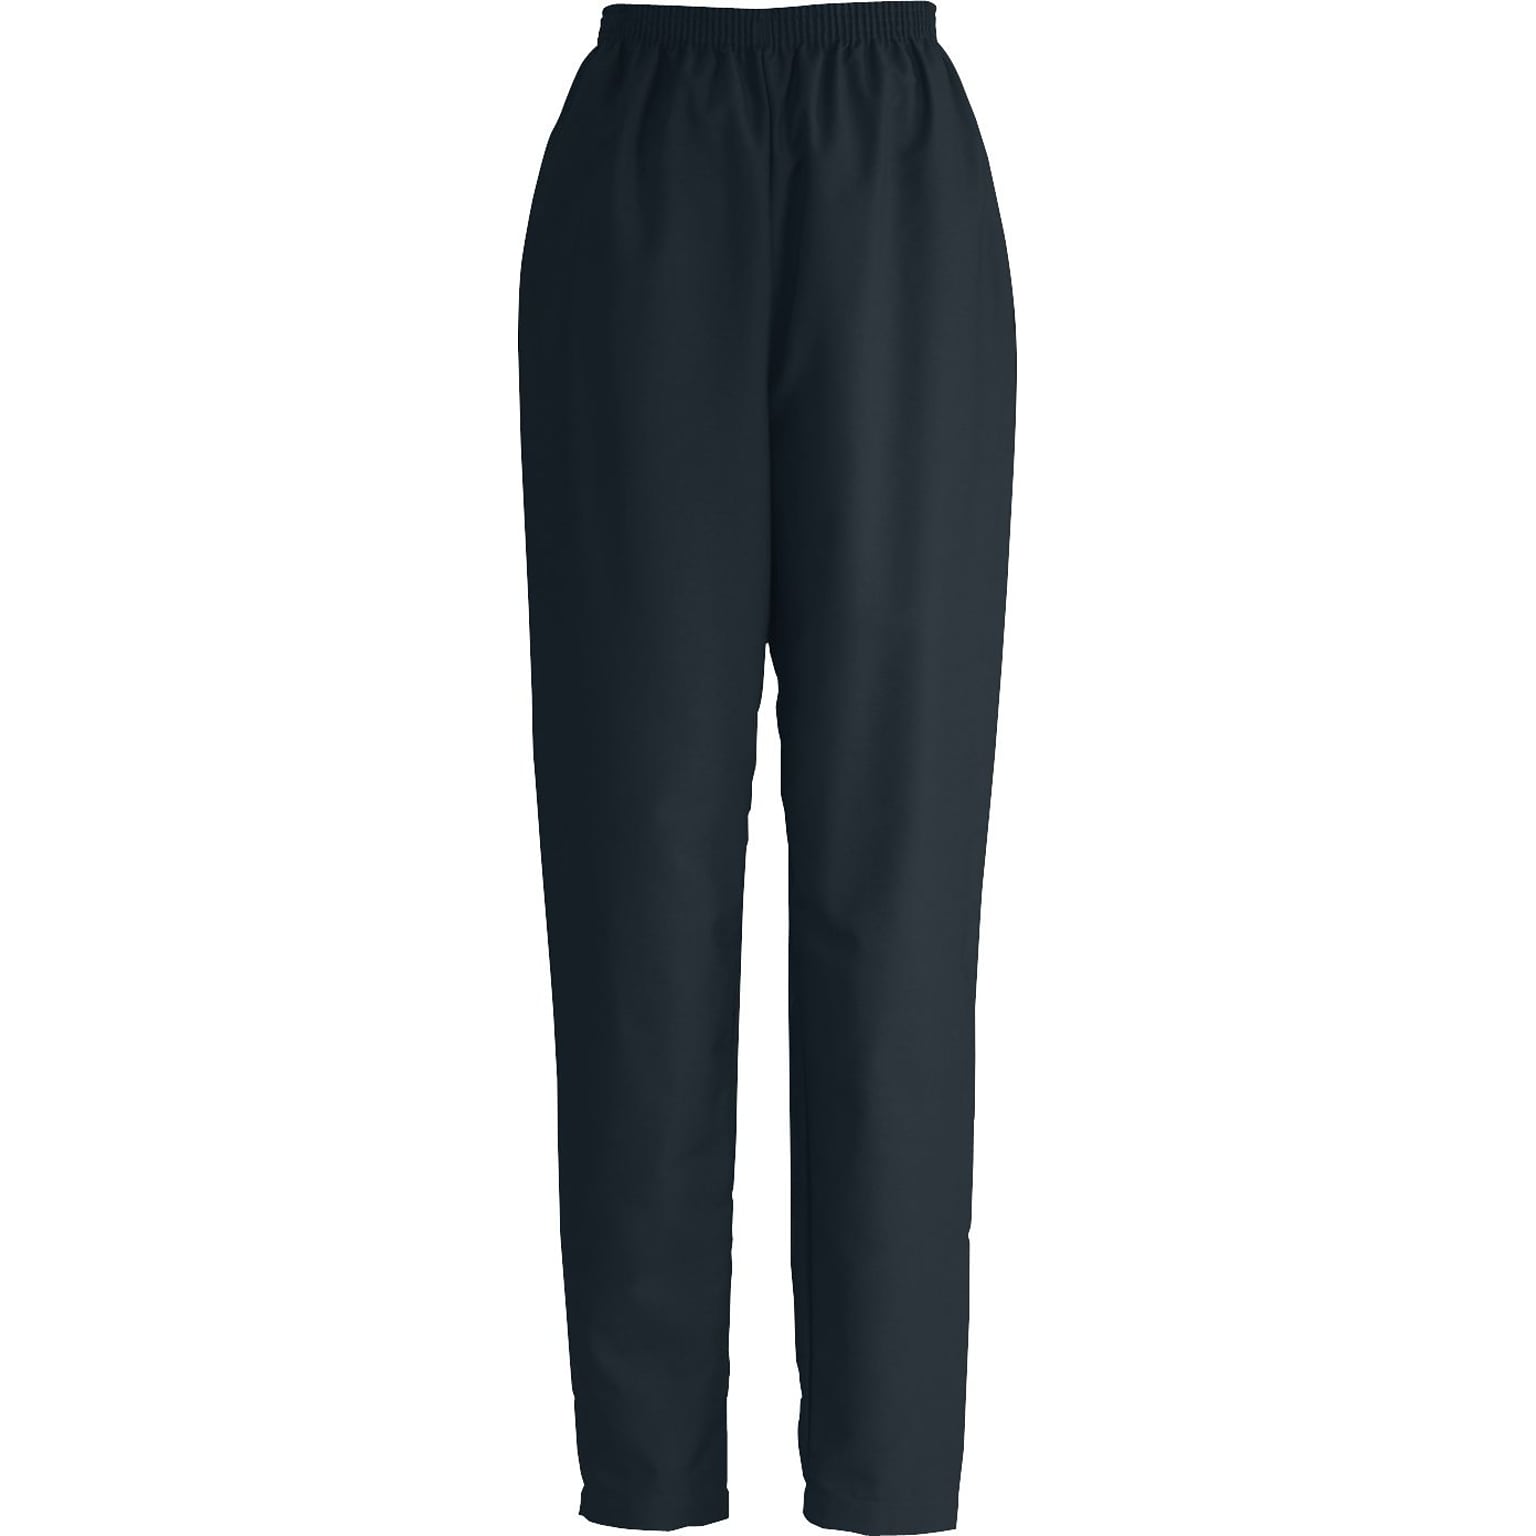 Medline ComfortEase Ladies Elastic Scrub Pants, Black, Medium, Regular Length